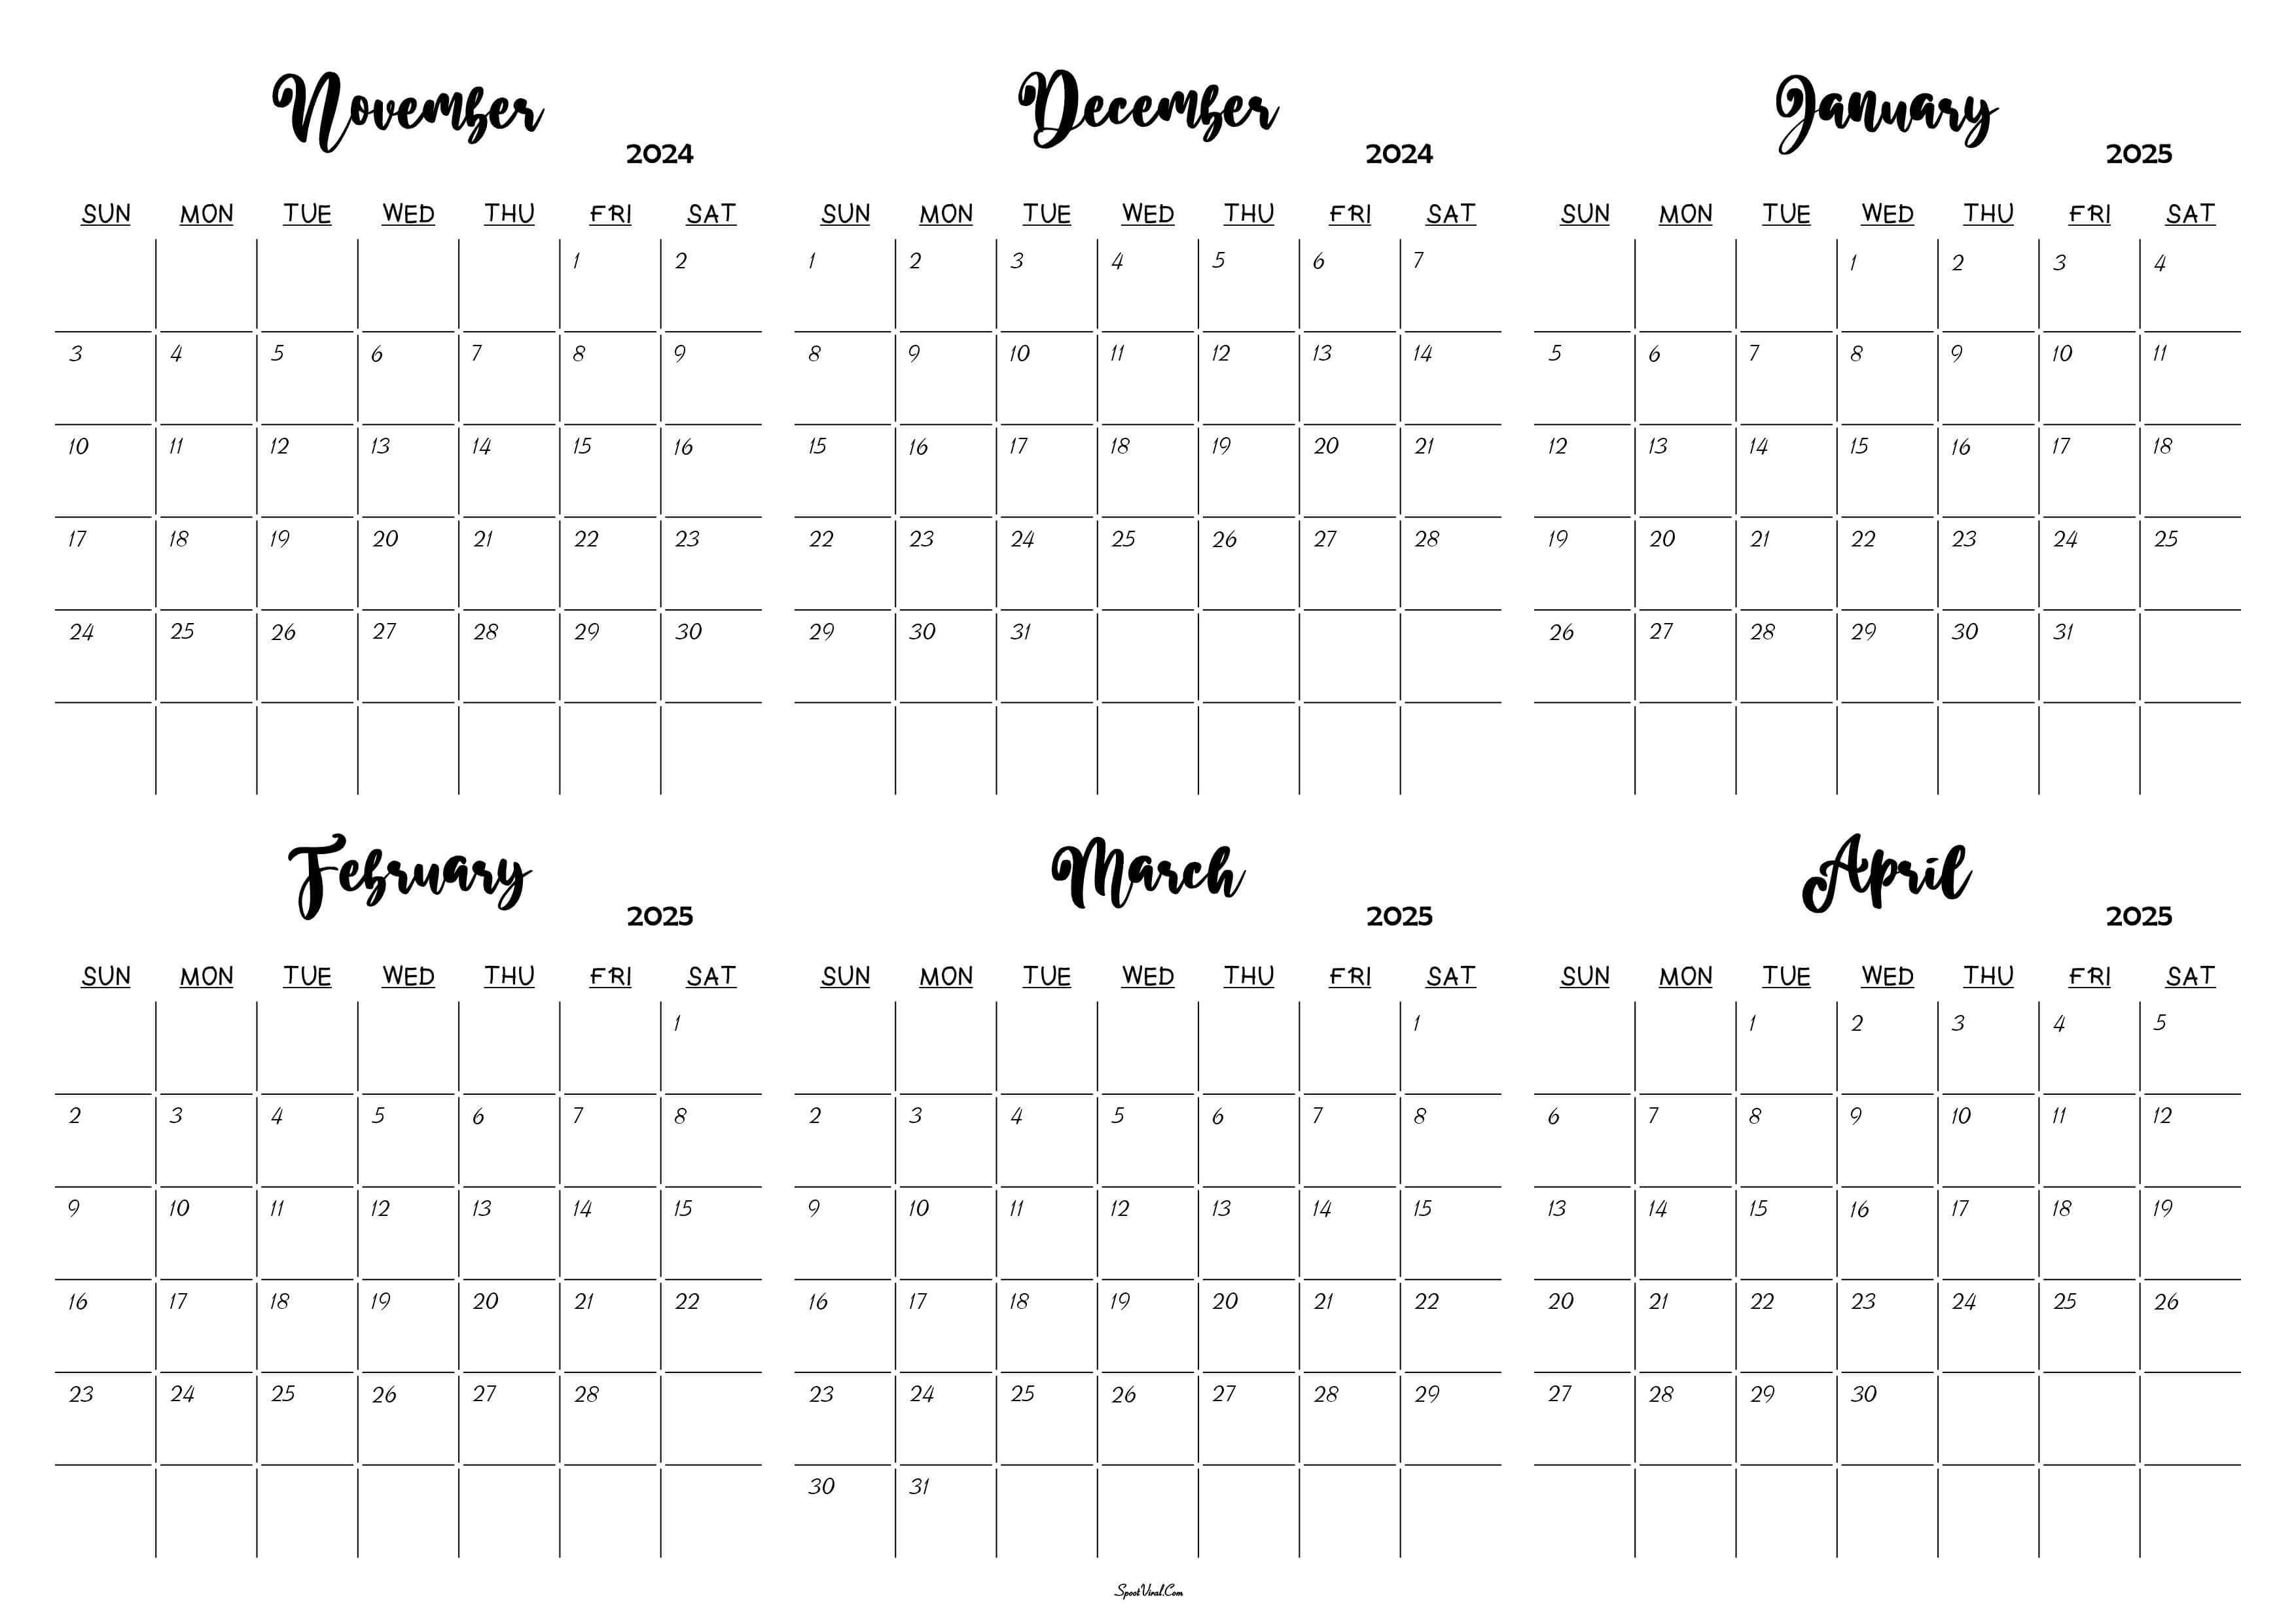 November 2024 to April 2025 Calendar